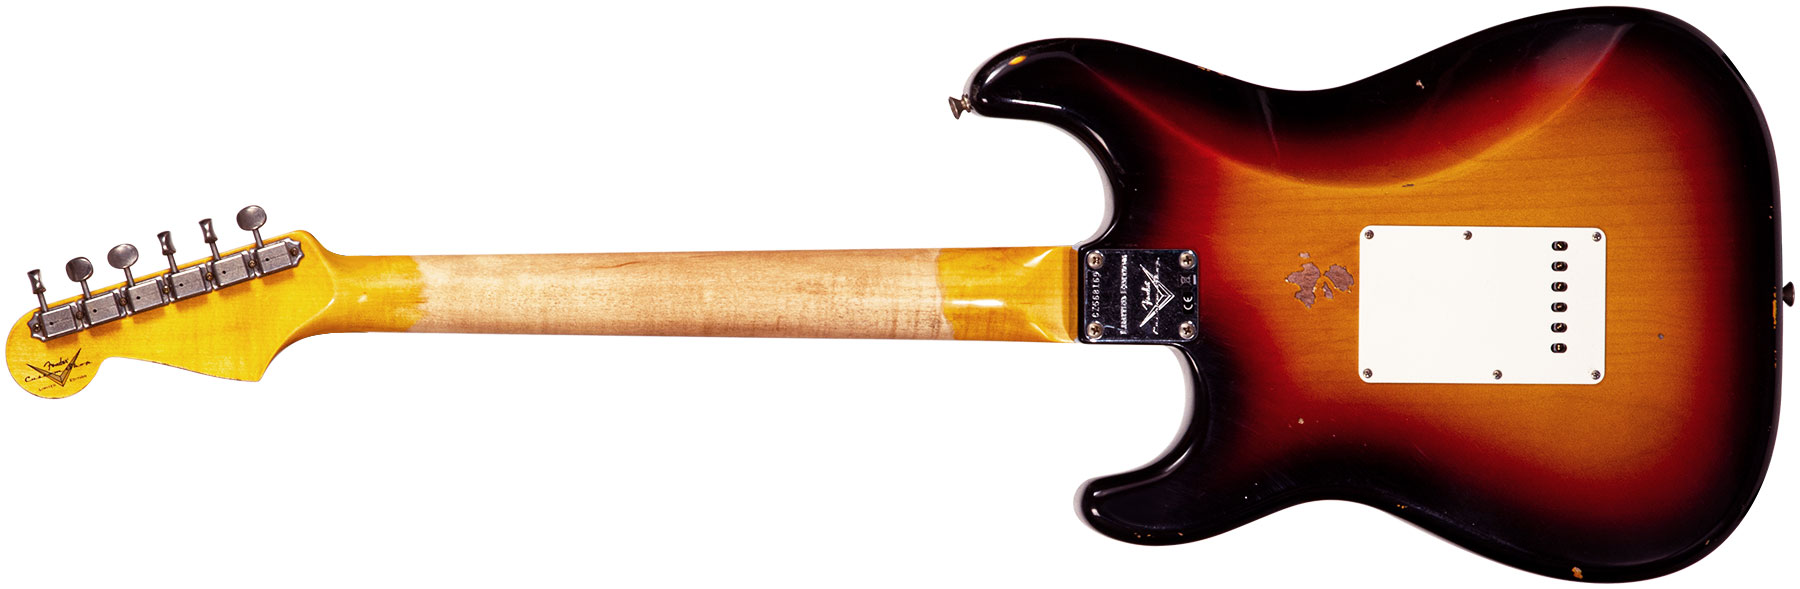 Fender Custom Shop Strat Late 64 3s Trem Rw #cz568169 - Relic Target 3-color Sunburst - Guitare Électrique Forme Str - Variation 1